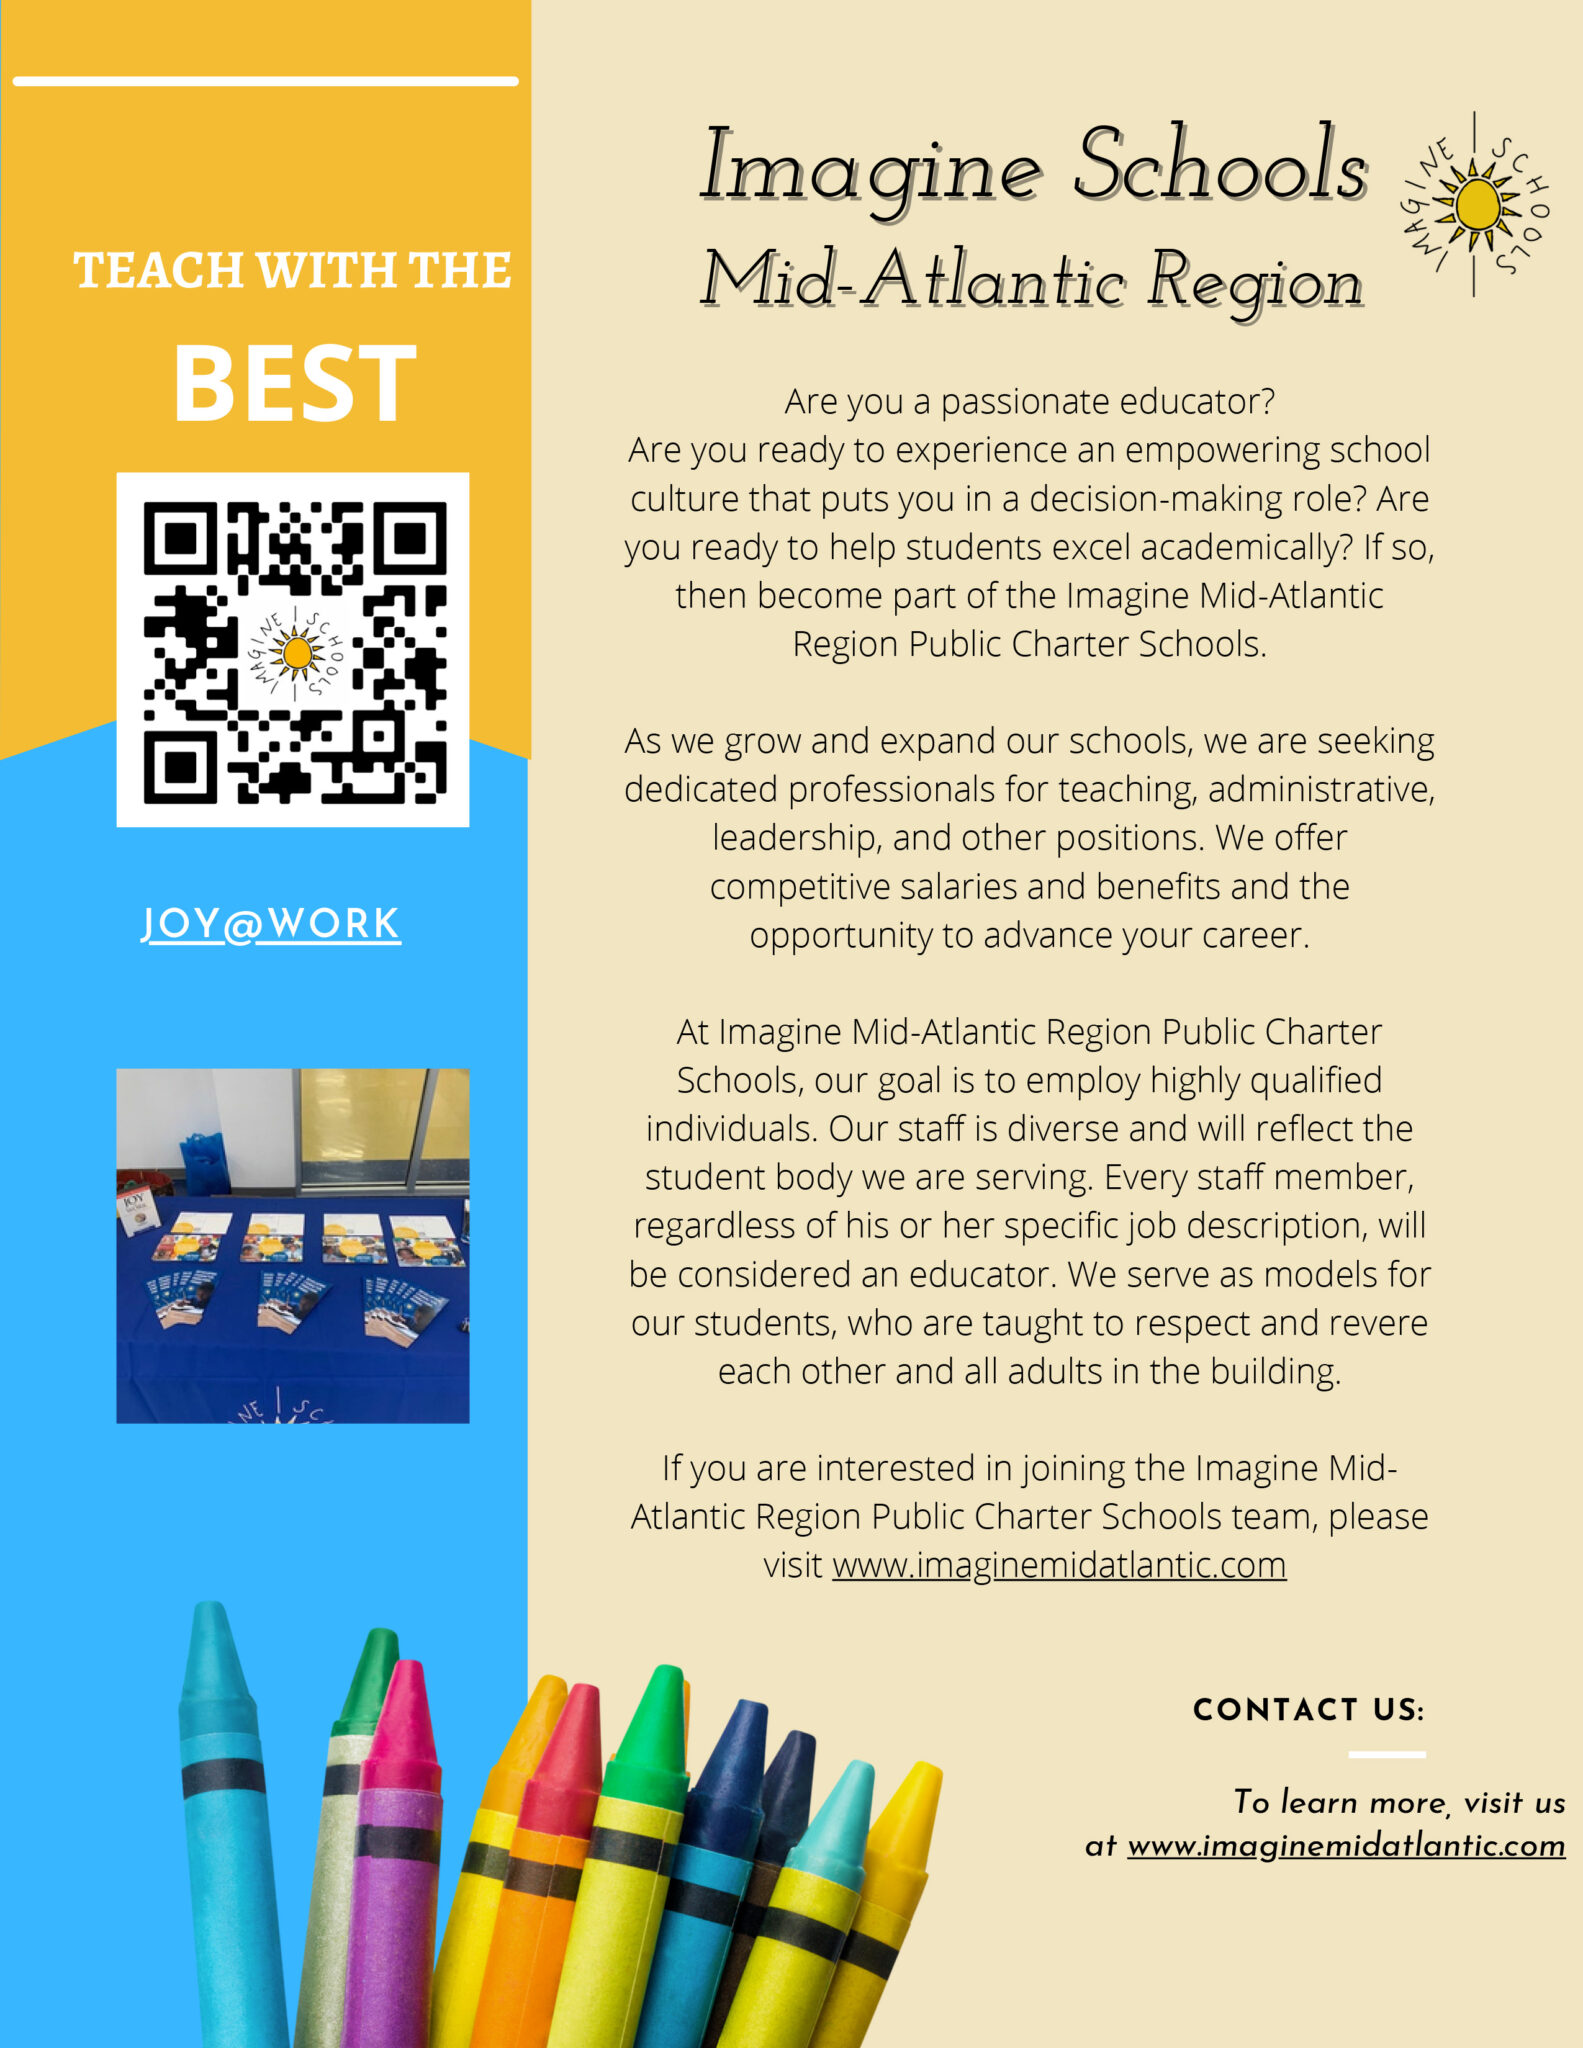 If you are interested in joining the Imagine Mid-Atlantic Region Public Charter Schools team, please visit imaginemidatlantic.com